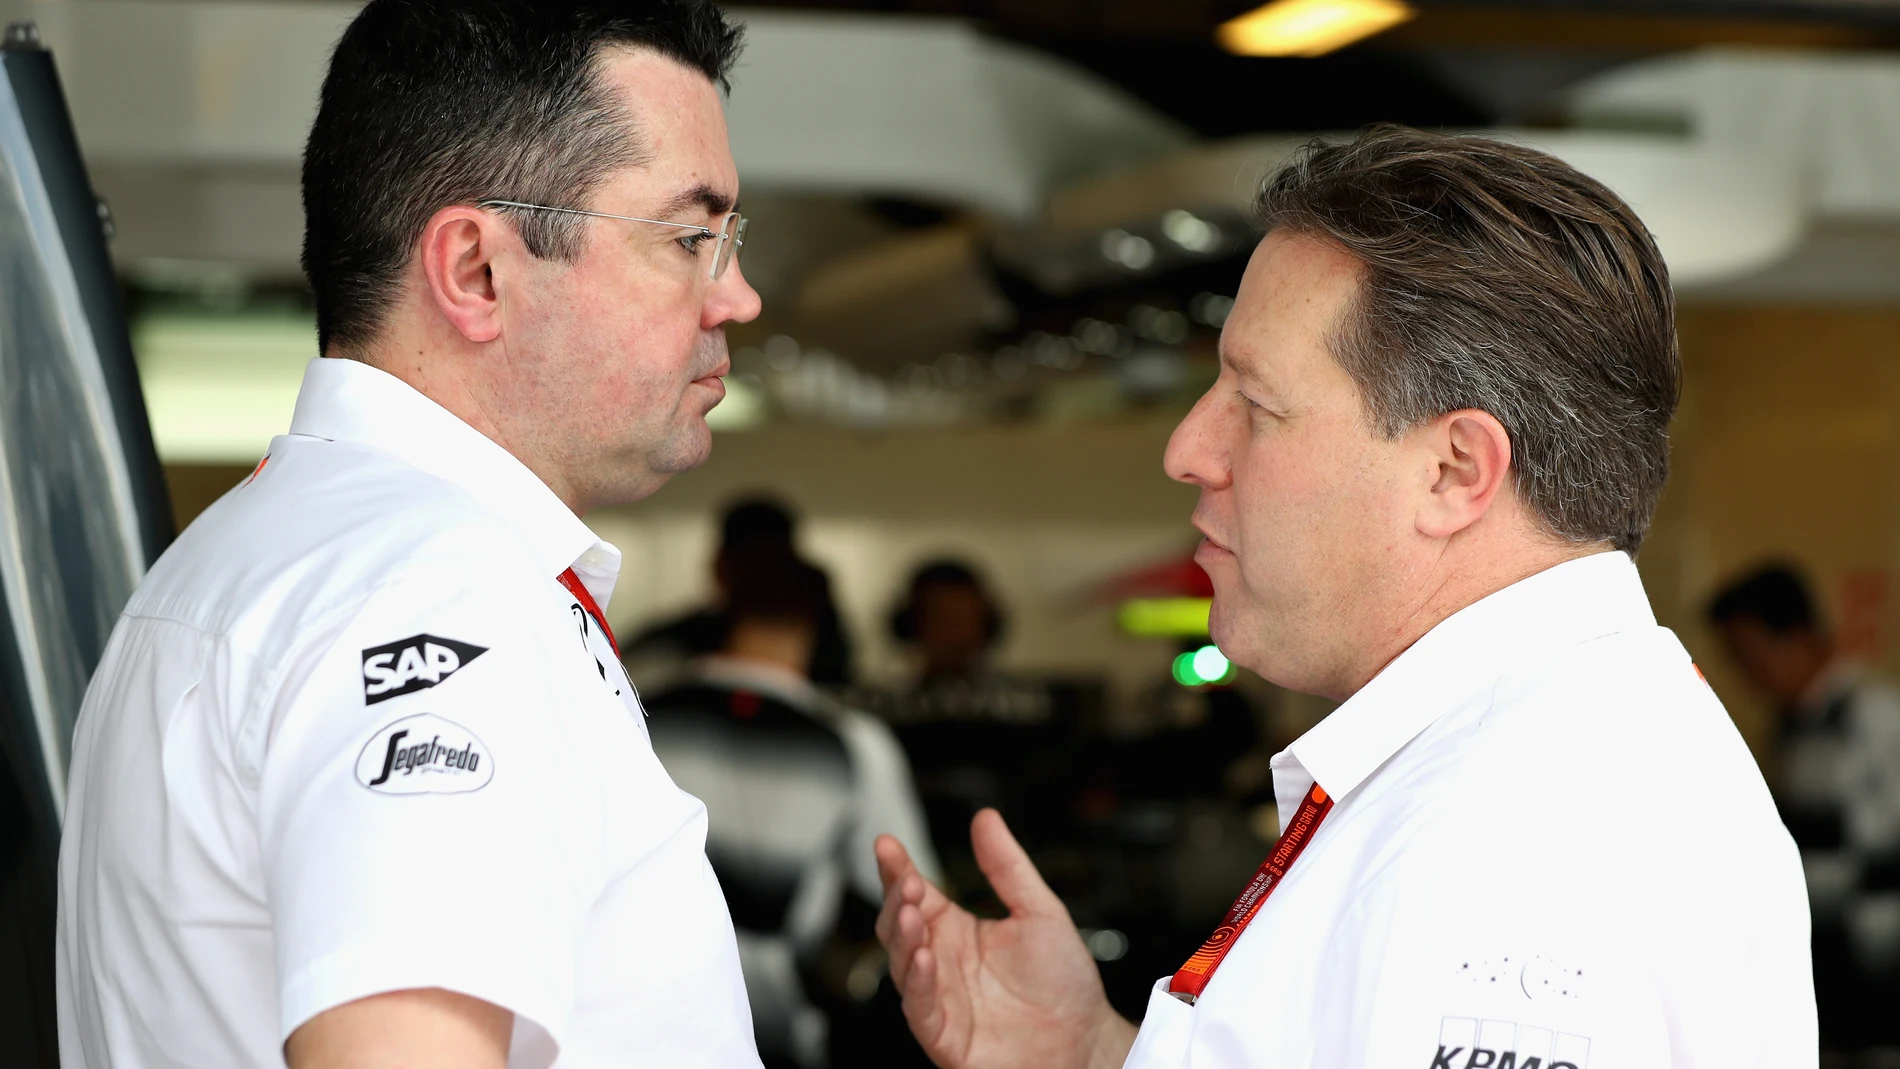 Boullier y Zak Brown dialogan en el box de McLaren